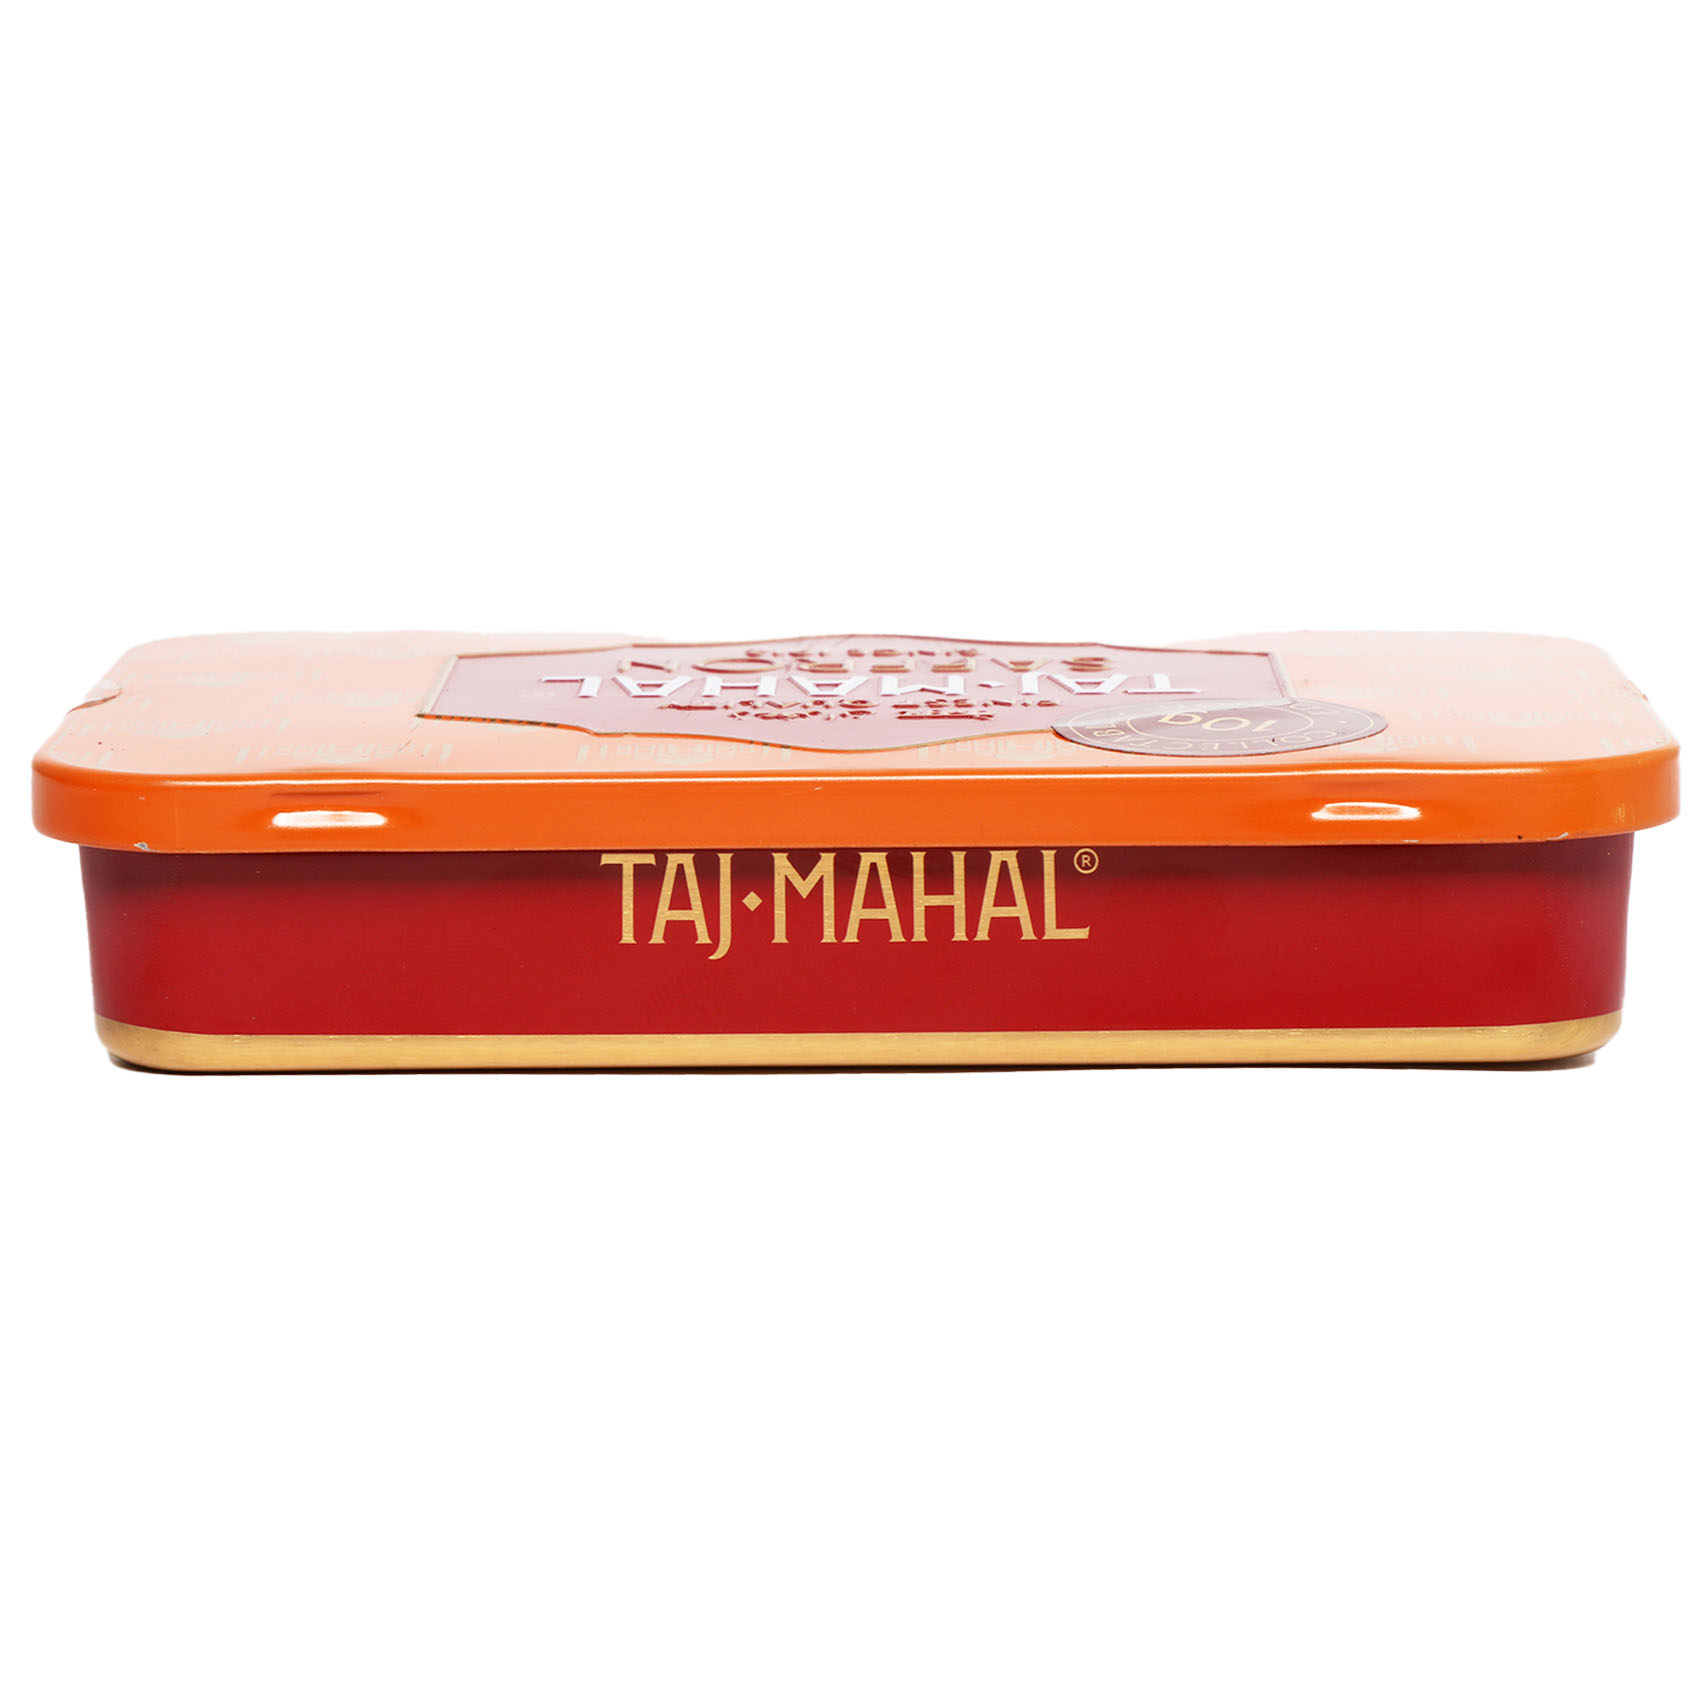 Taj Mahal Saffron 10g (Spain)